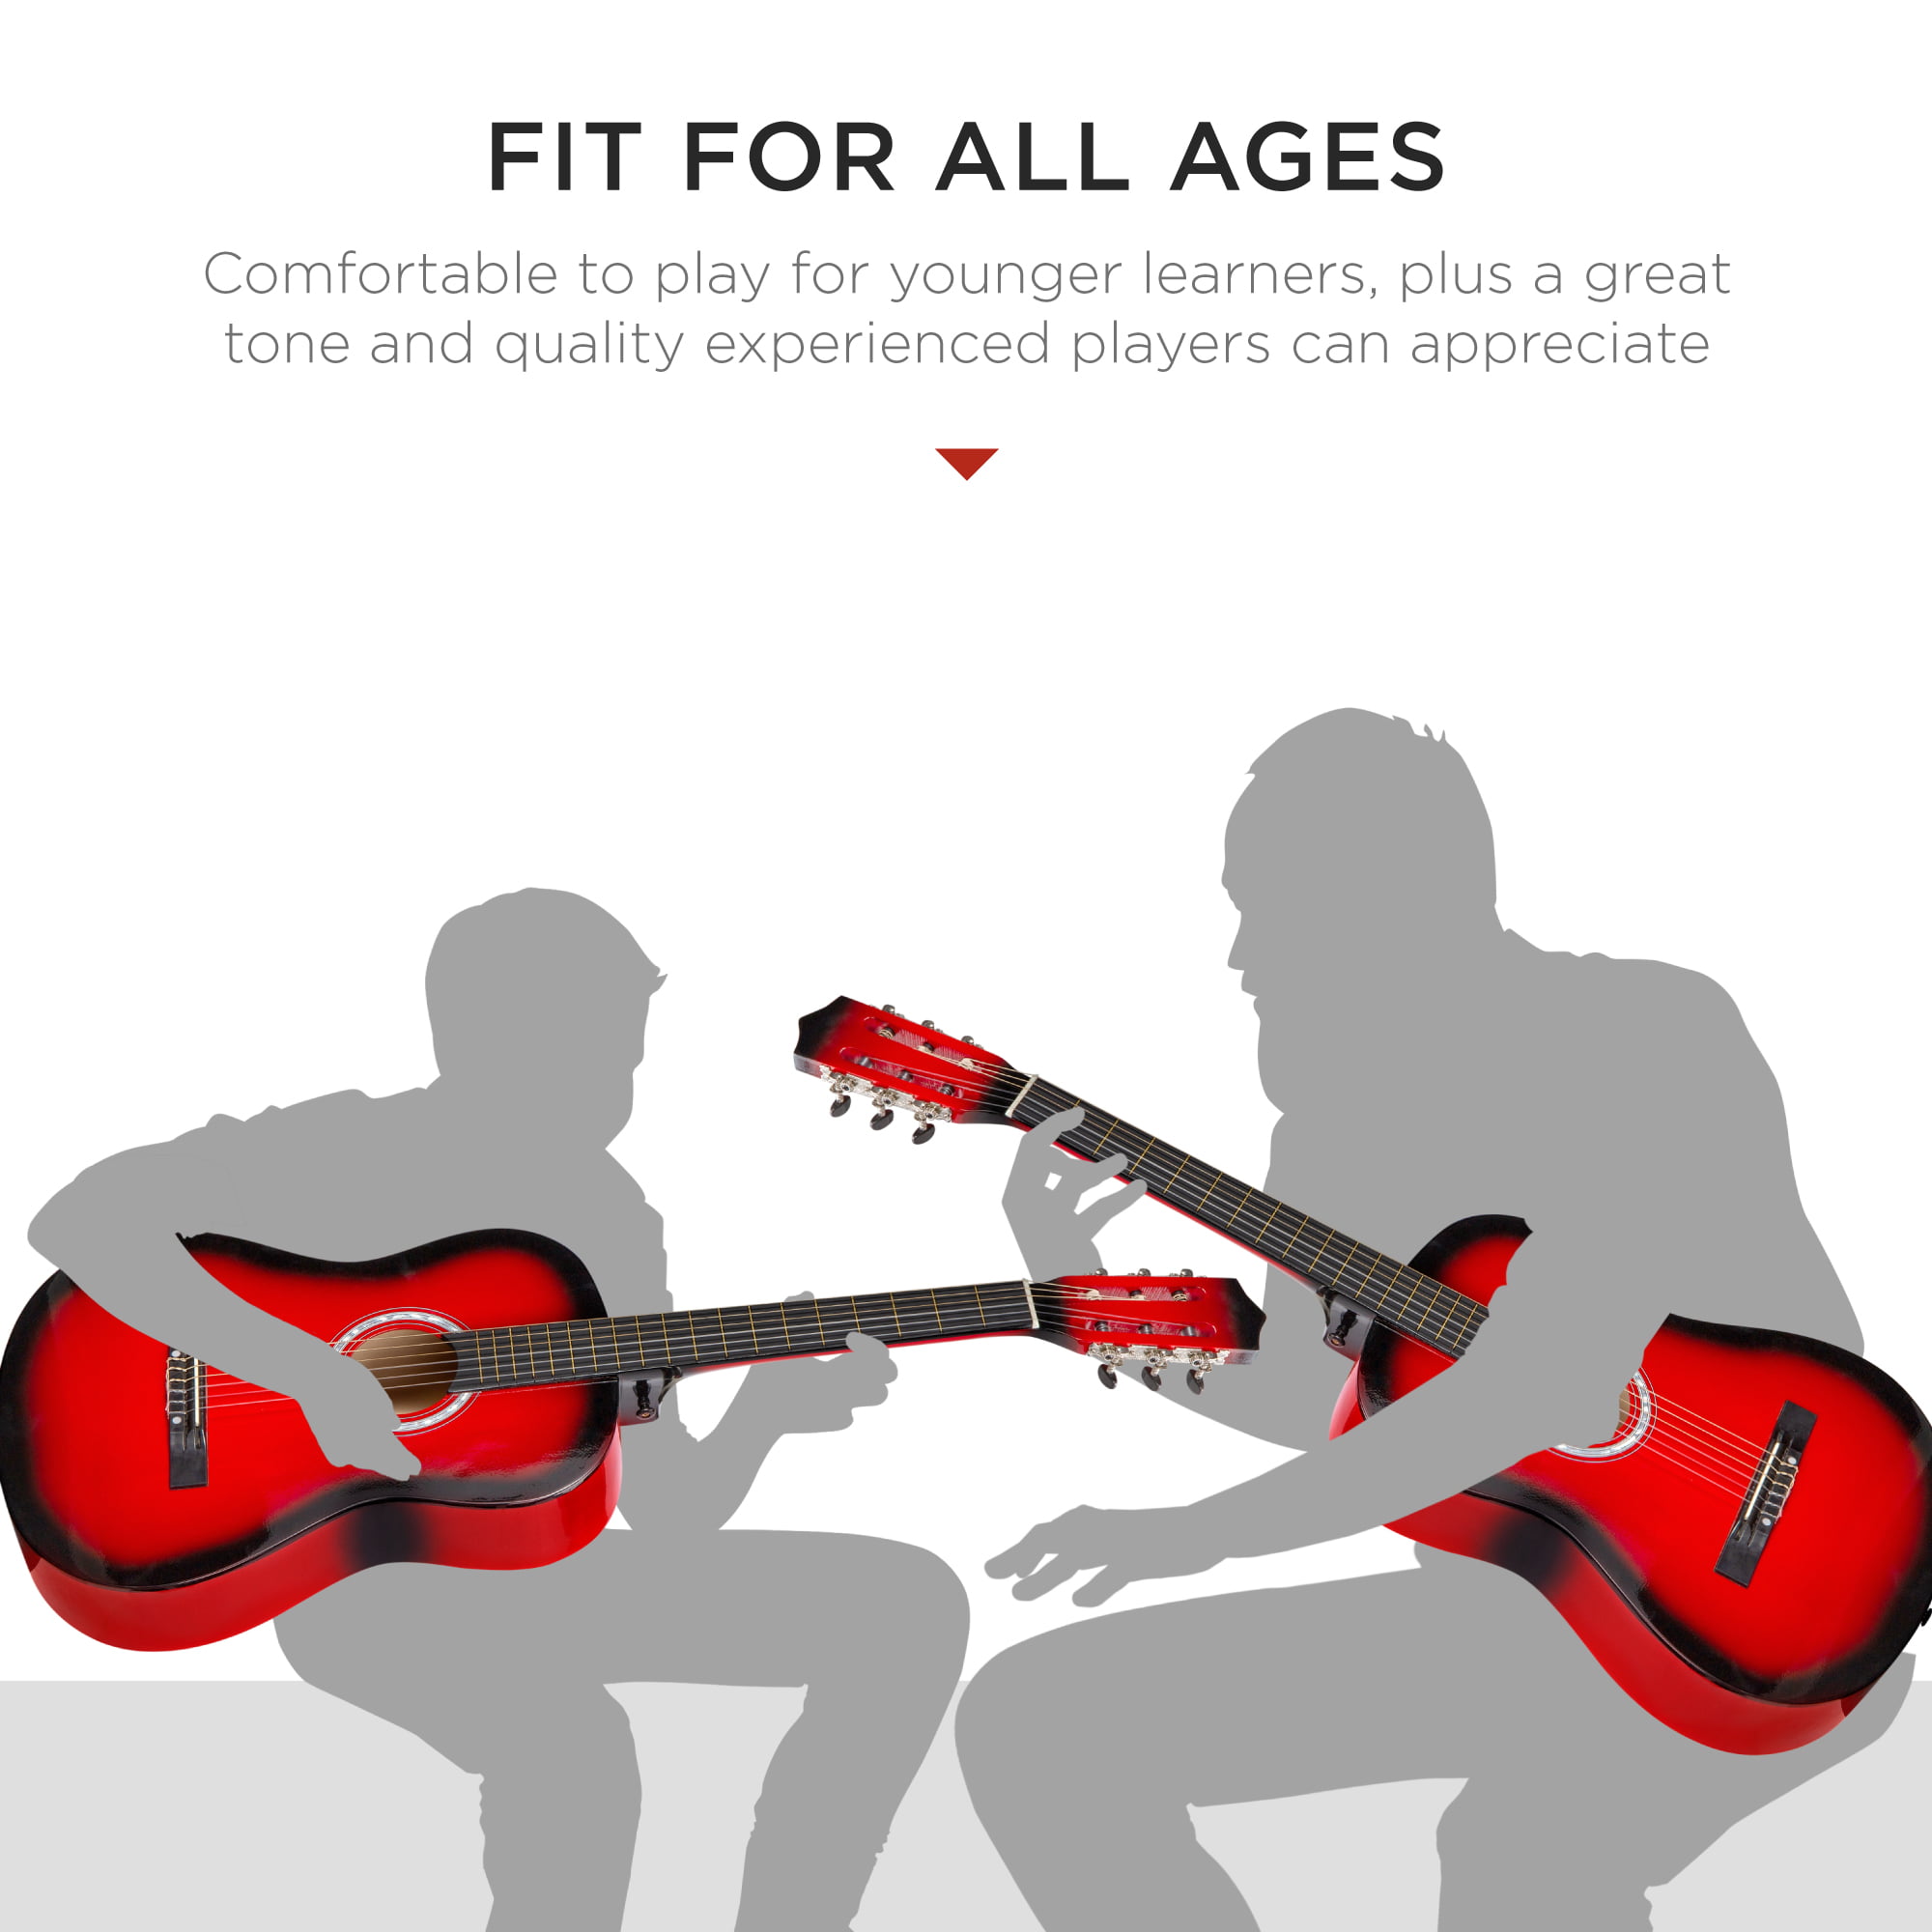  Ashthorpe 38-inch Beginner Acoustic Guitar Package (Red), Basic  Starter Kit w/Gig Bag, Strings, Strap, Tuner, Pitch Pipe, Picks : Musical  Instruments